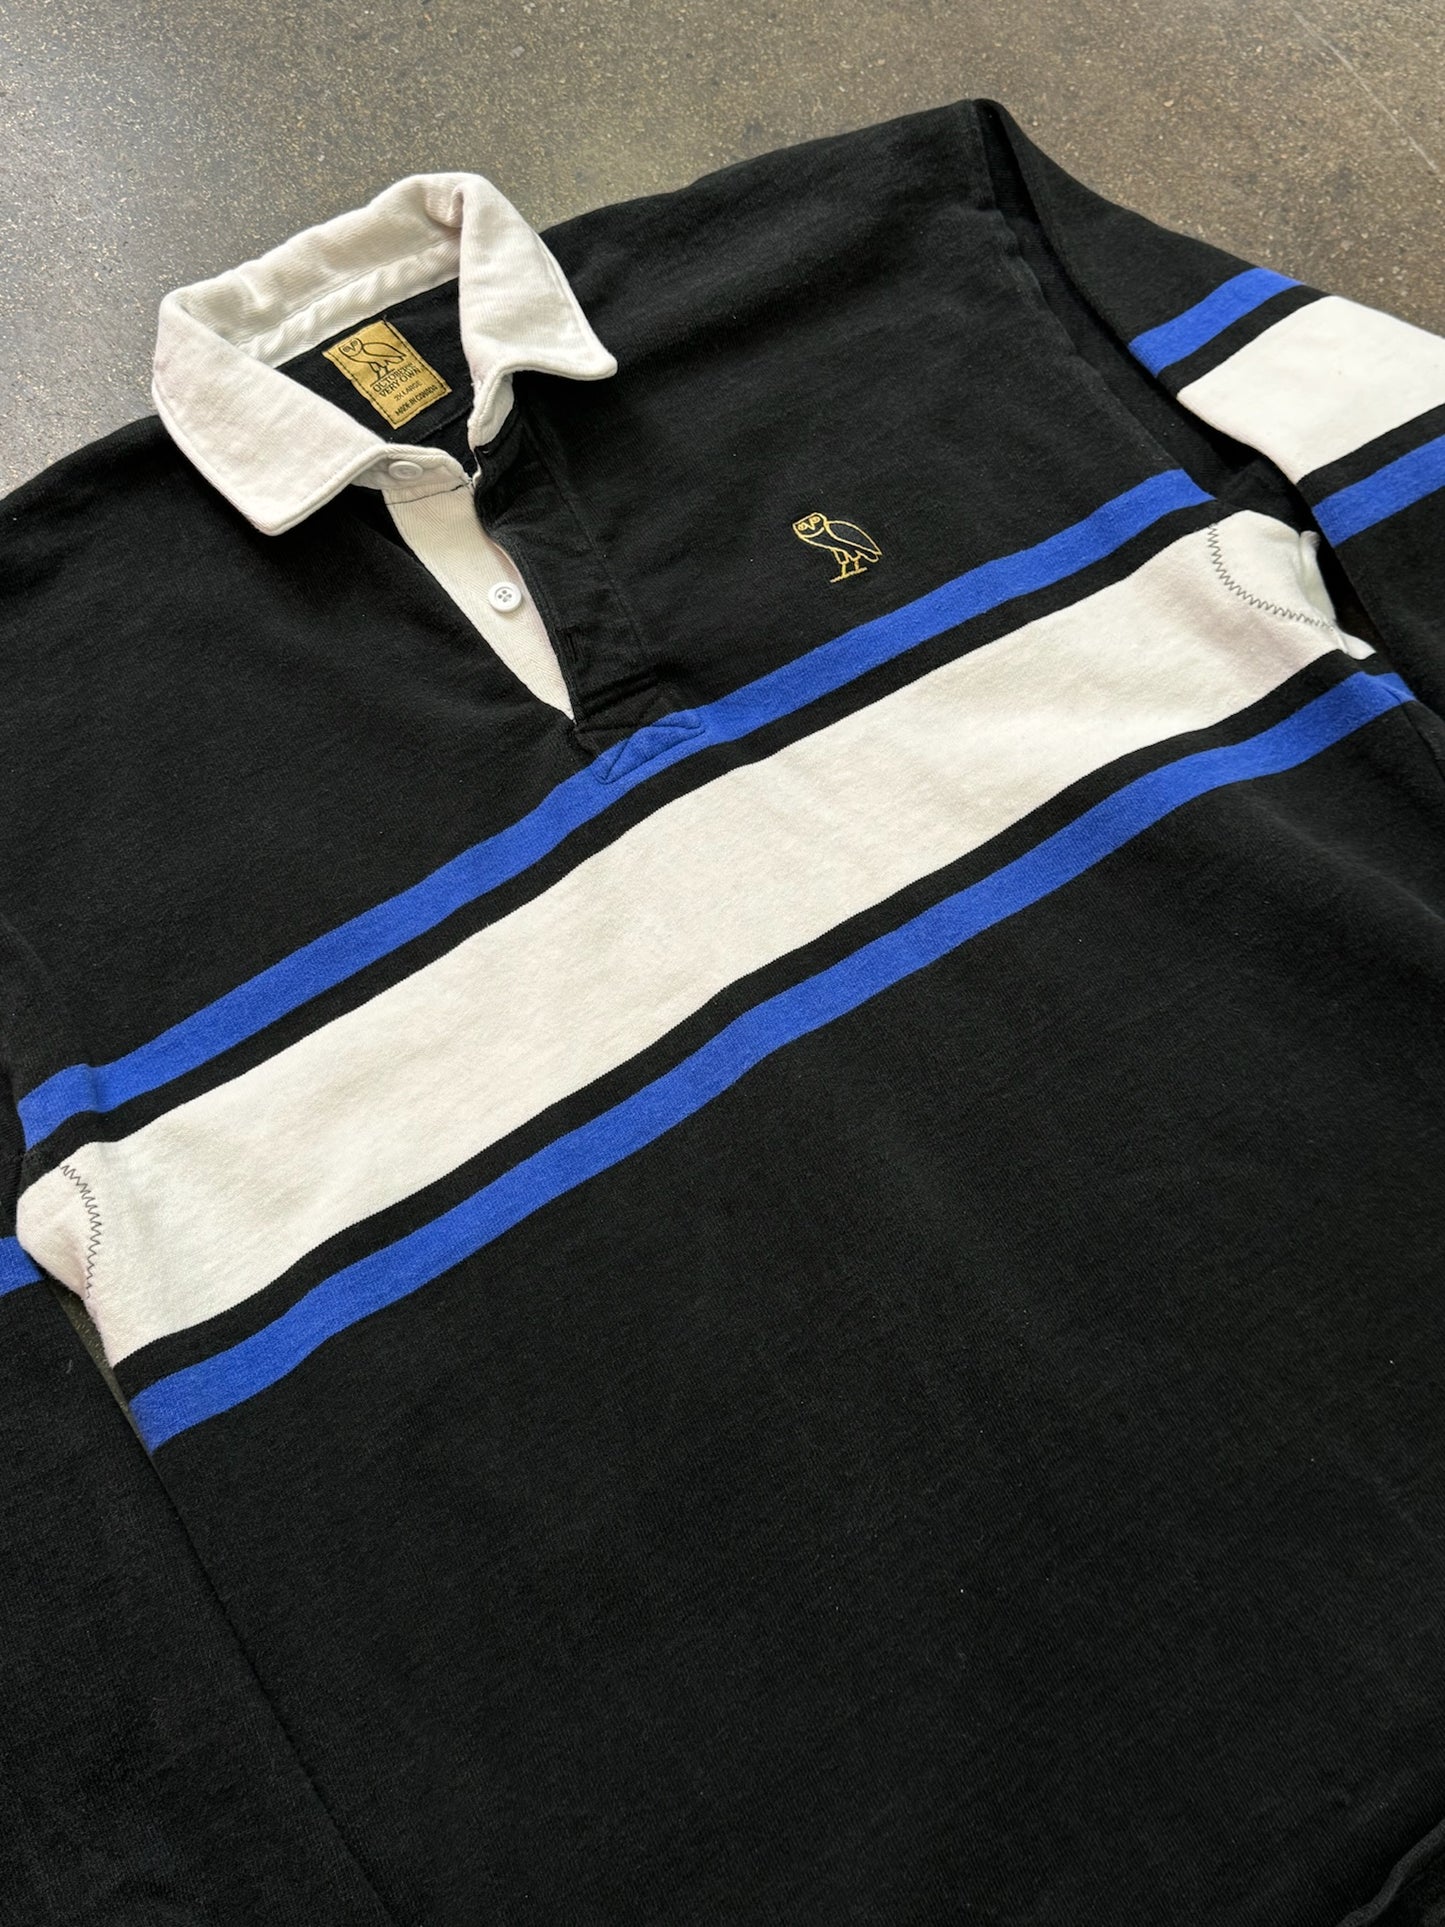 OVO Rugby Polo Blue Black Shirt Size XXL